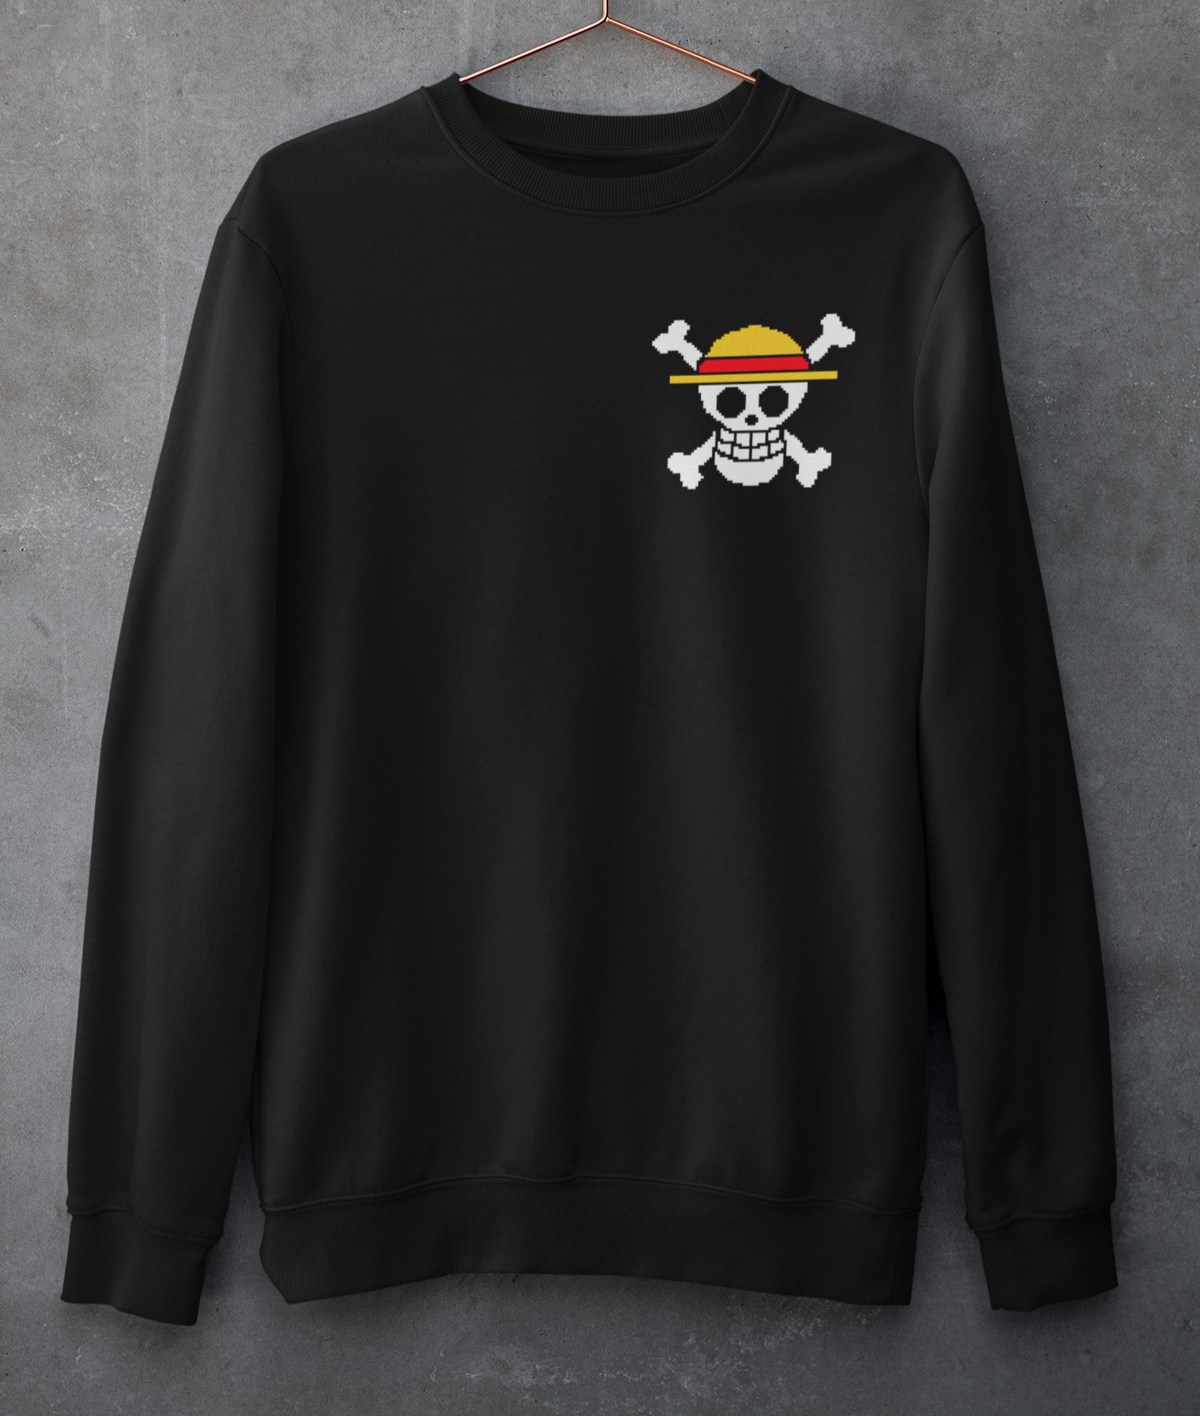 Blacl sweatshirt Monkey D. Luffy